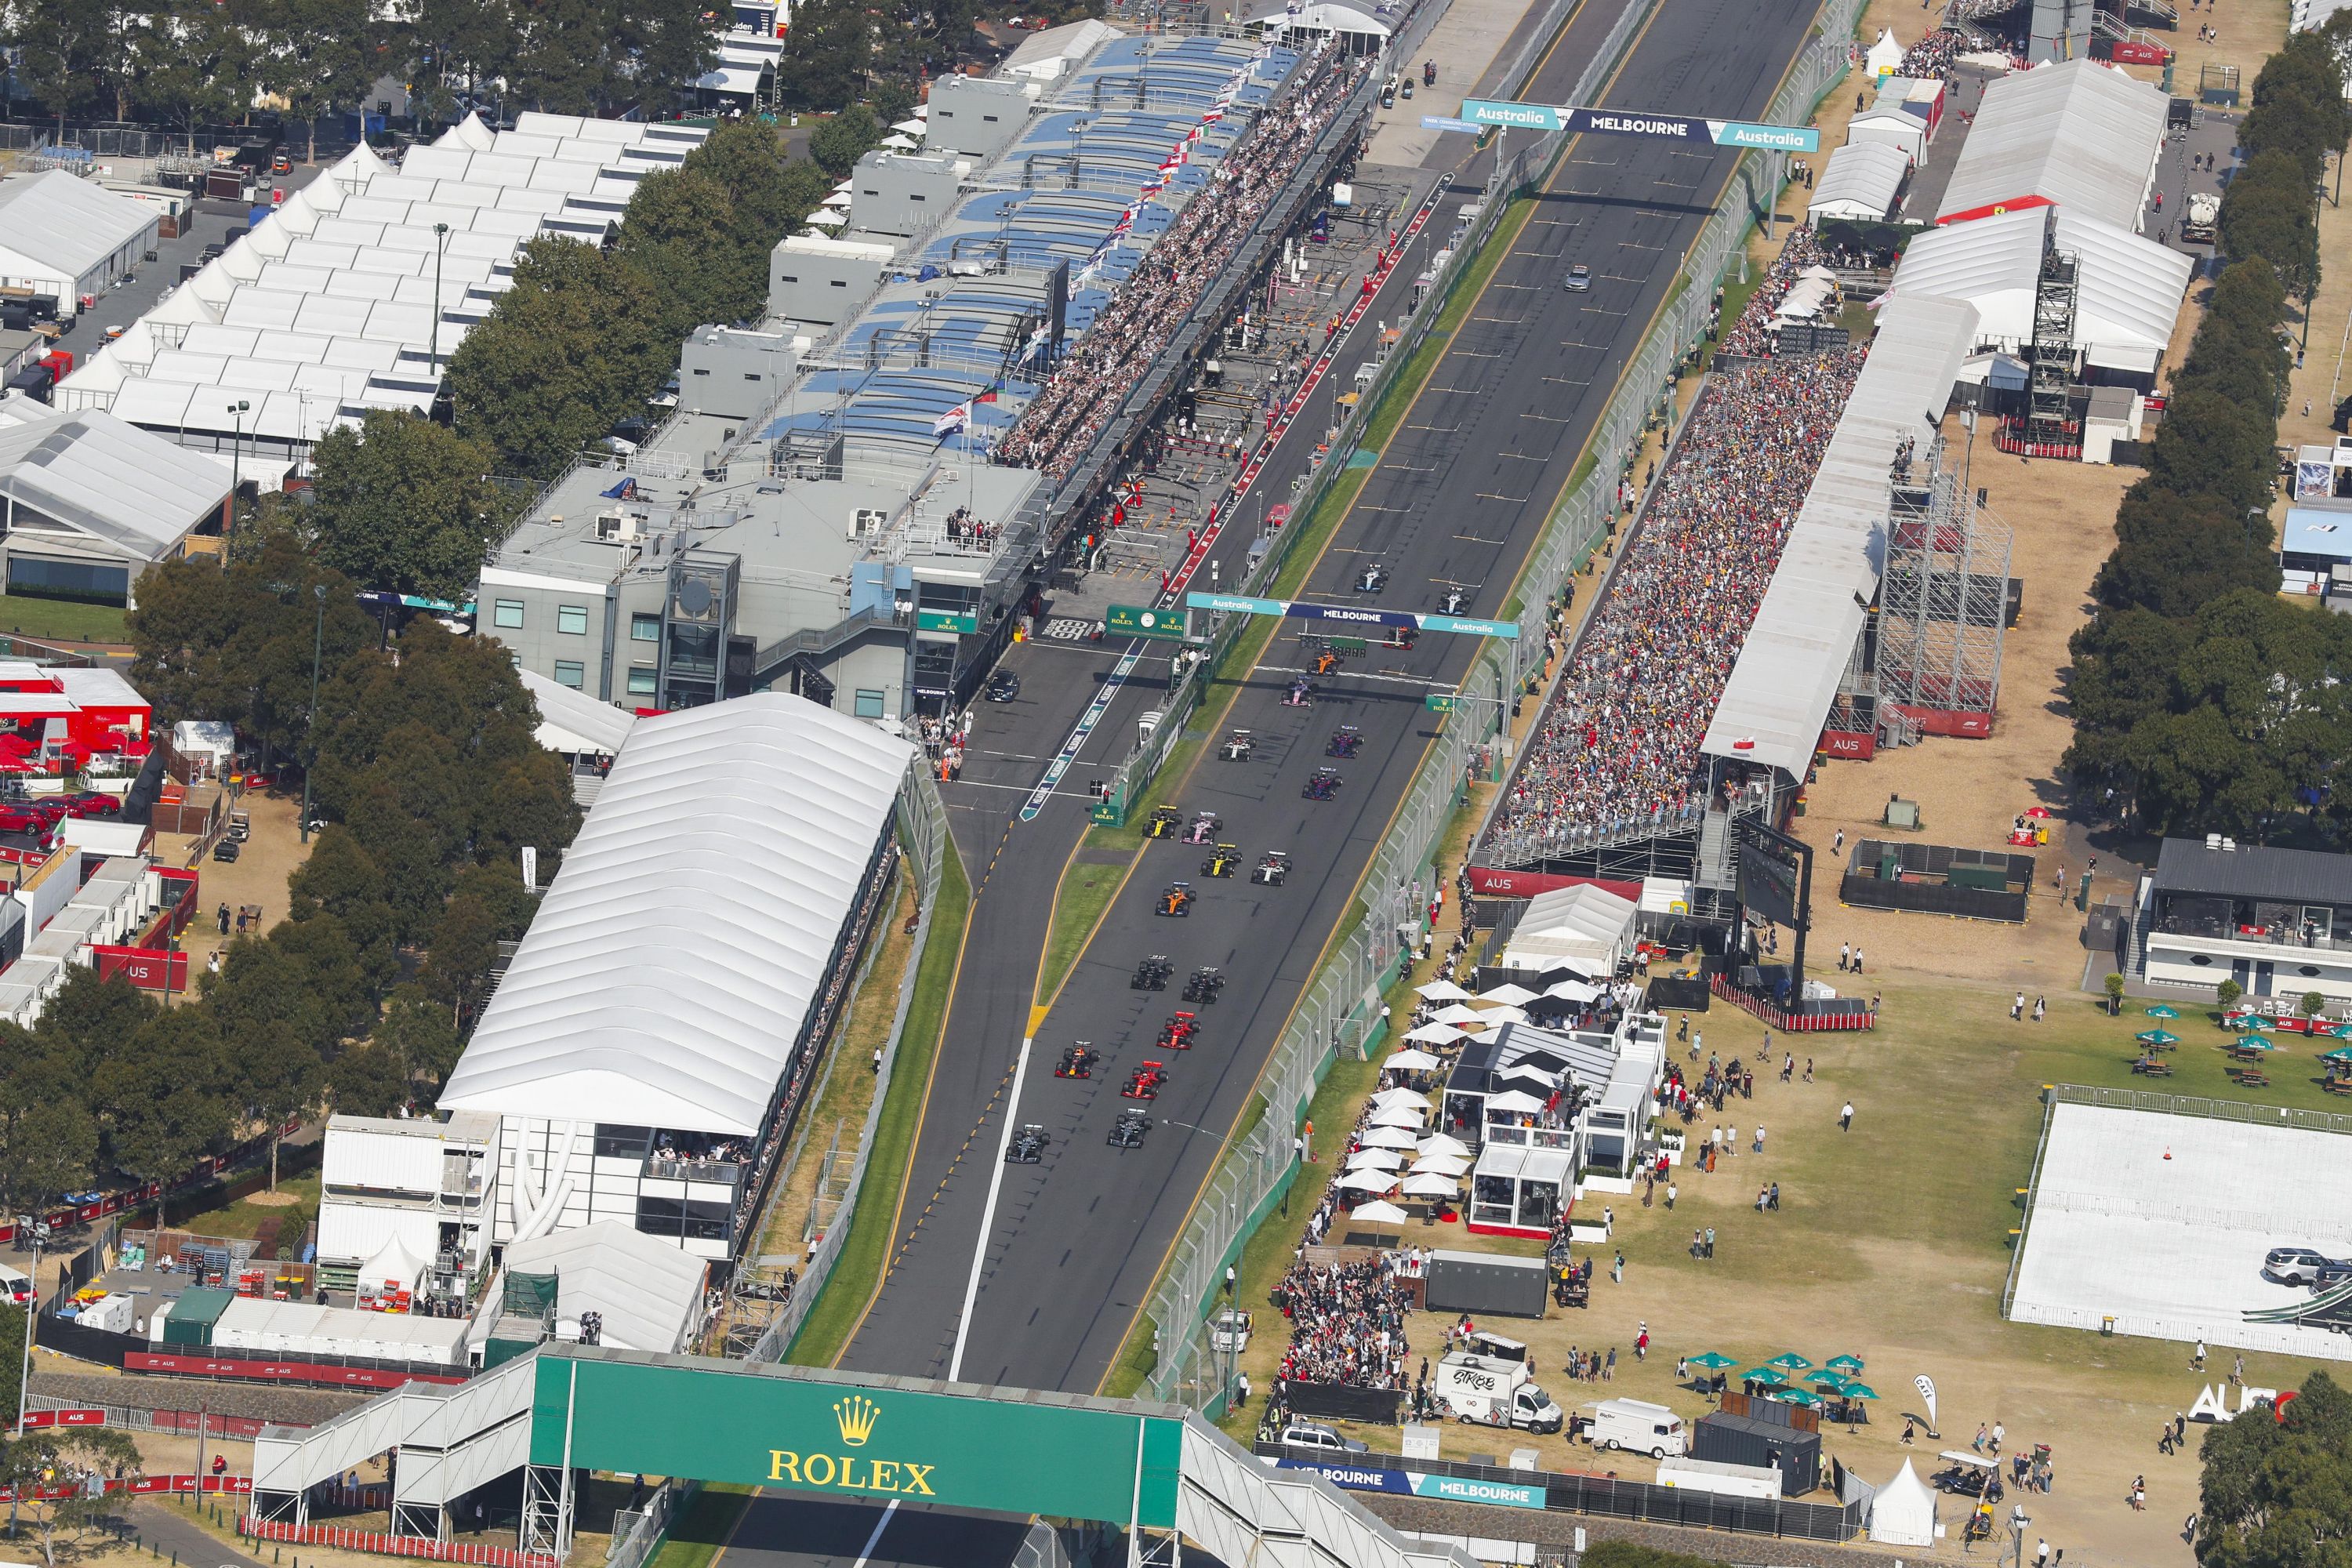 2023 Formulation 1 Australian Grand Prix schedule